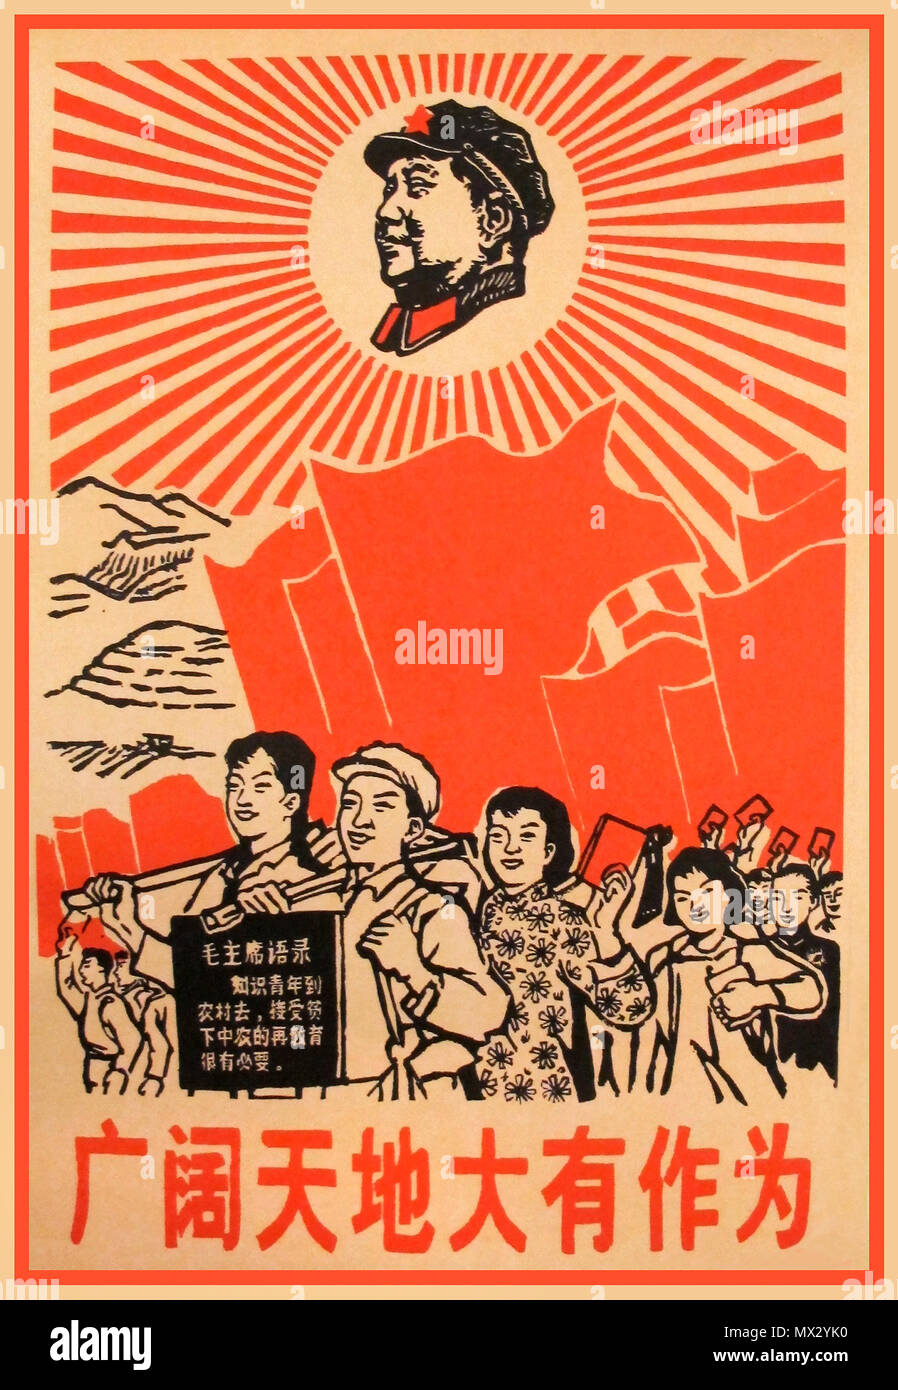 1967 Vintage Chinese Propaganda Poster, with Chairman Mao Zedong as a shining sun. Propaganda message reads  'Vast World of Accomplishments',  Communist Vintage Propaganda Poster Stock Photo